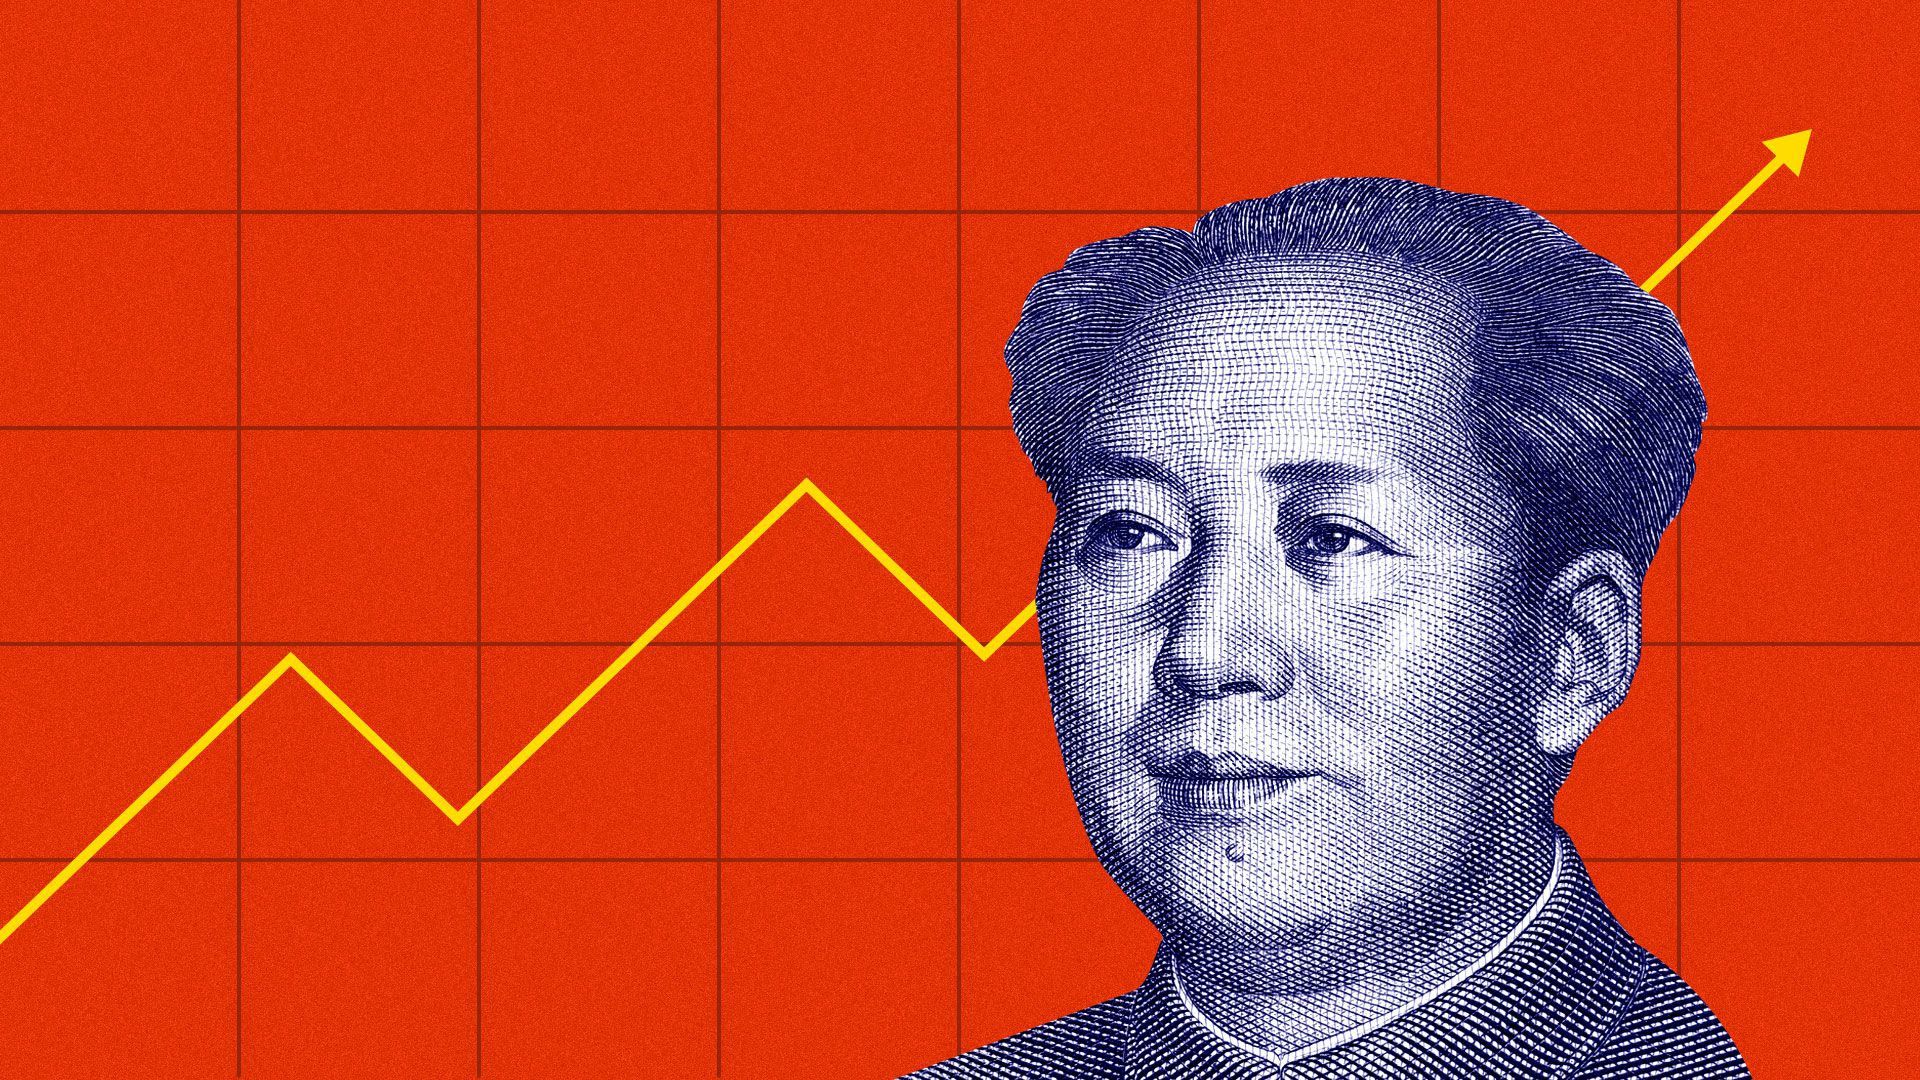 Illustration of China's former leader Mao Zedong